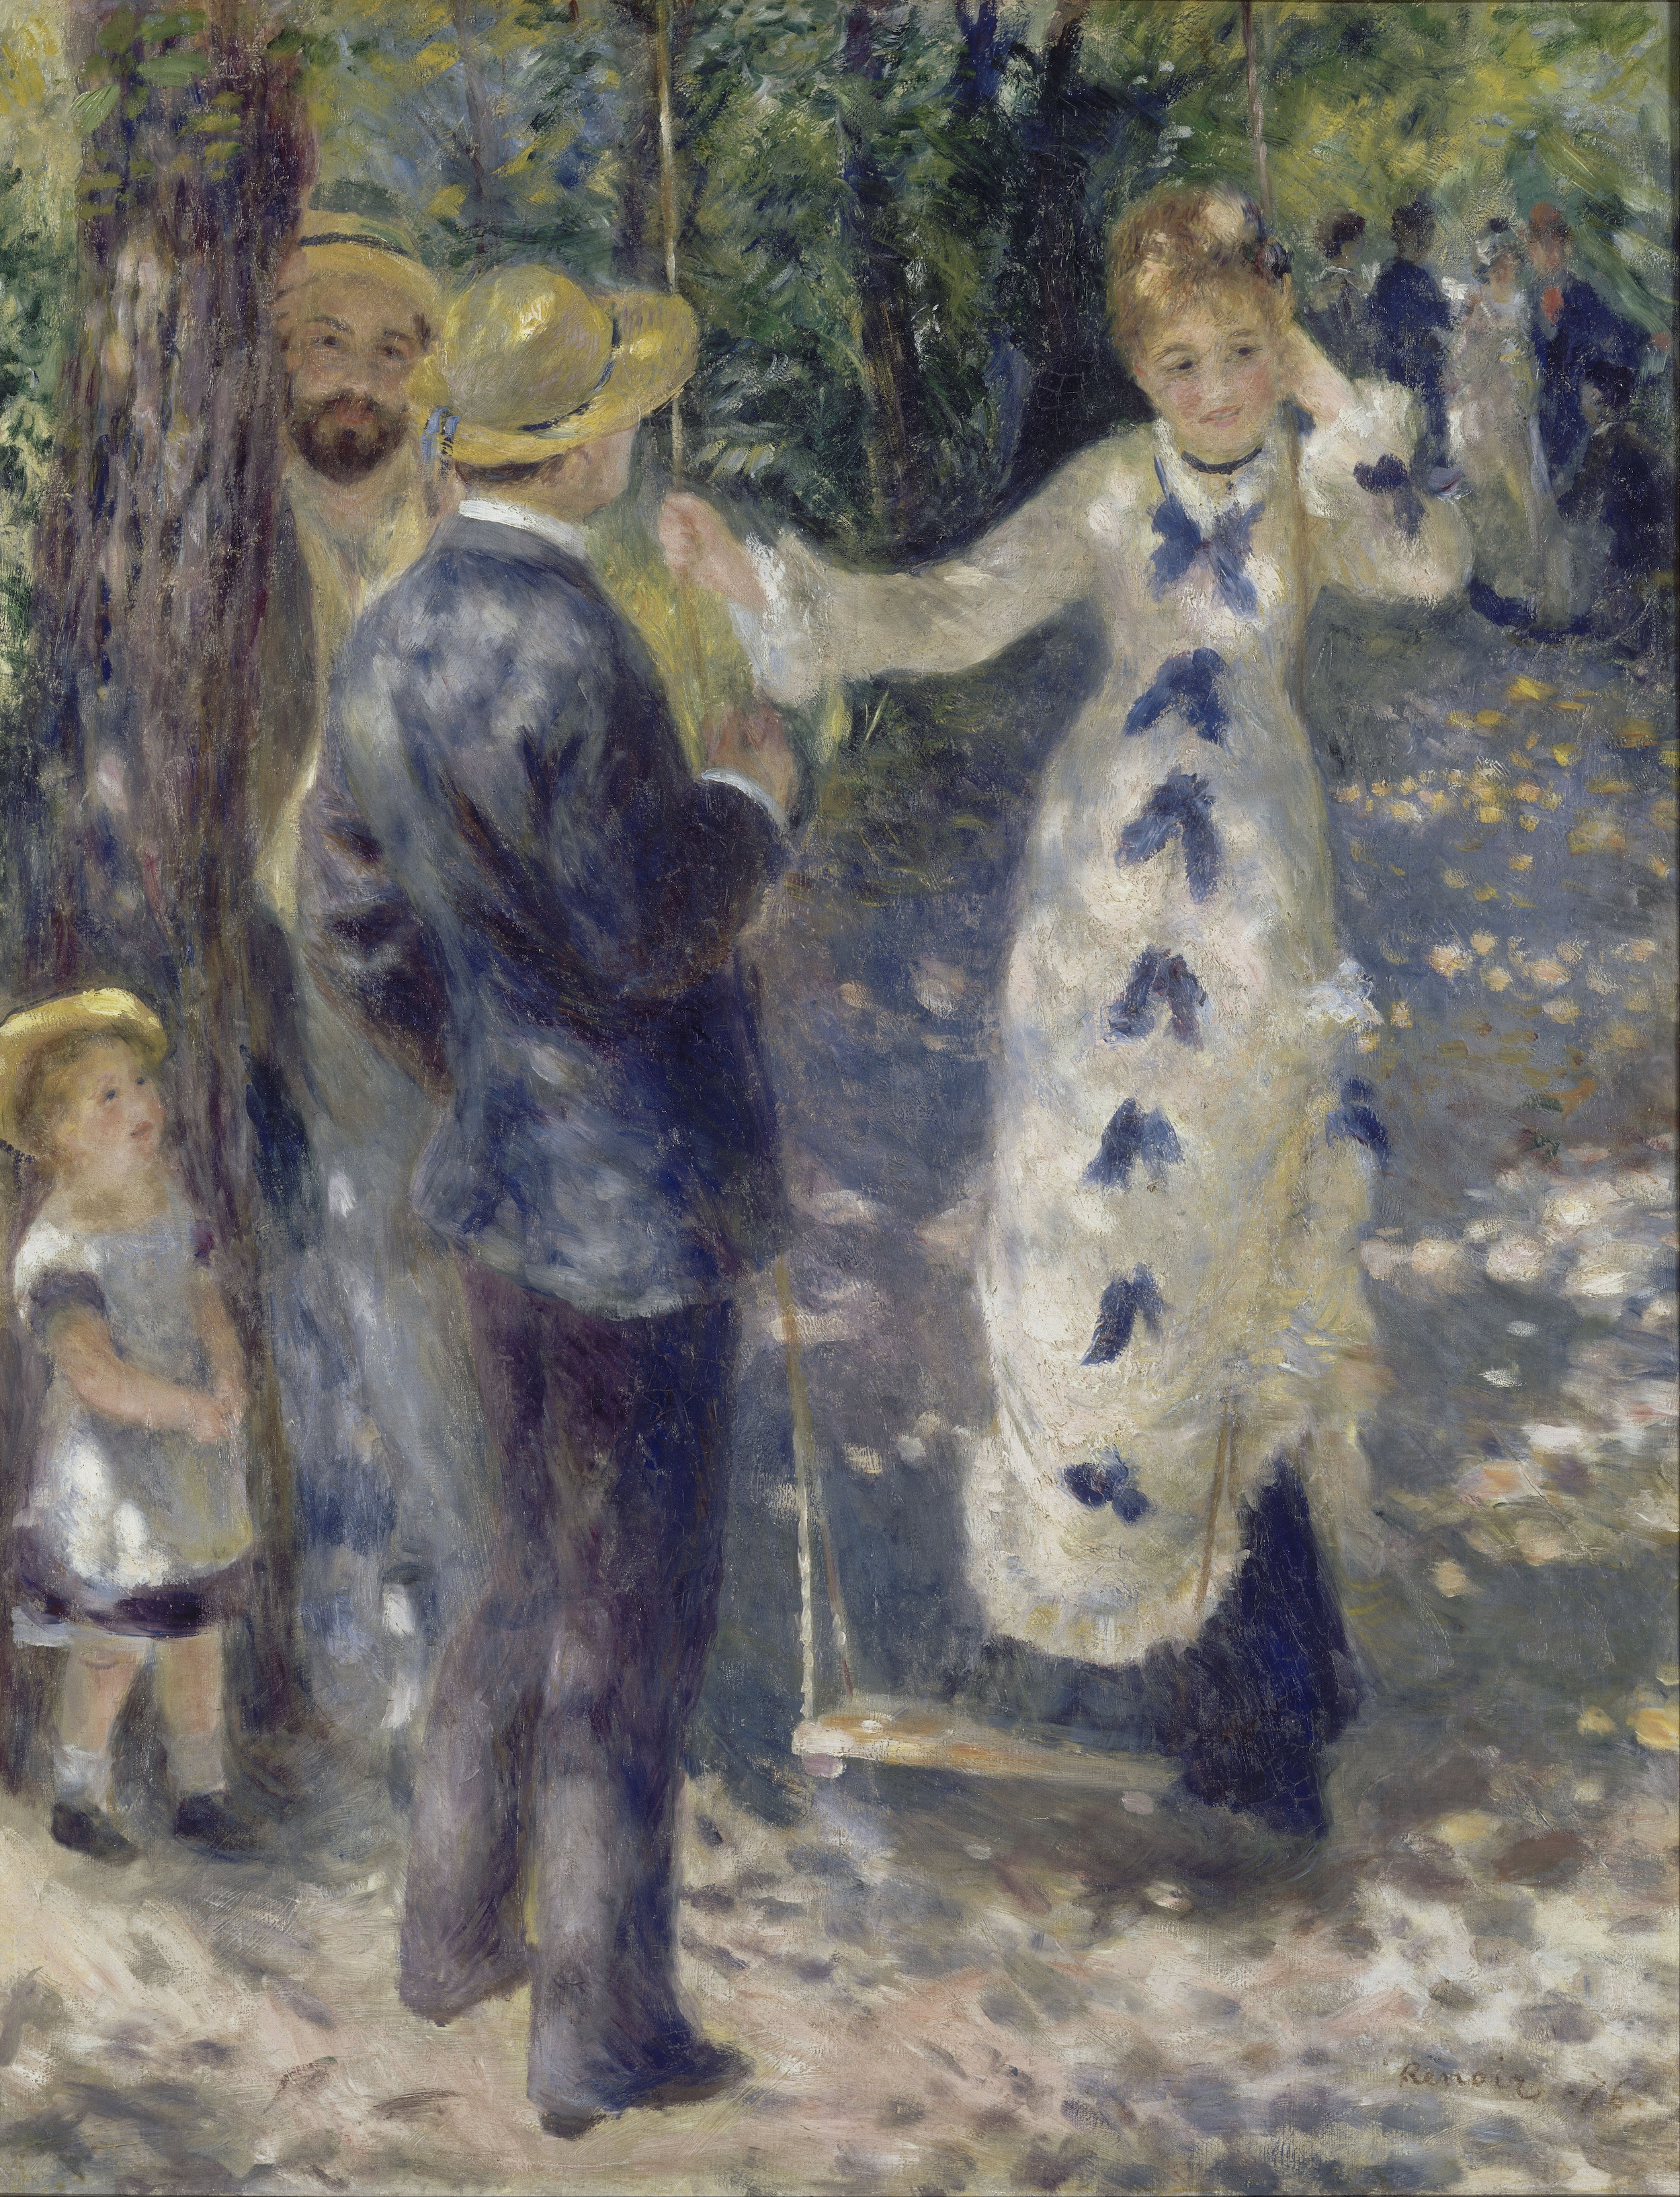 Salıncak by Pierre-Auguste Renoir - 1876 - 92 x 73 cm Musée d'Orsay